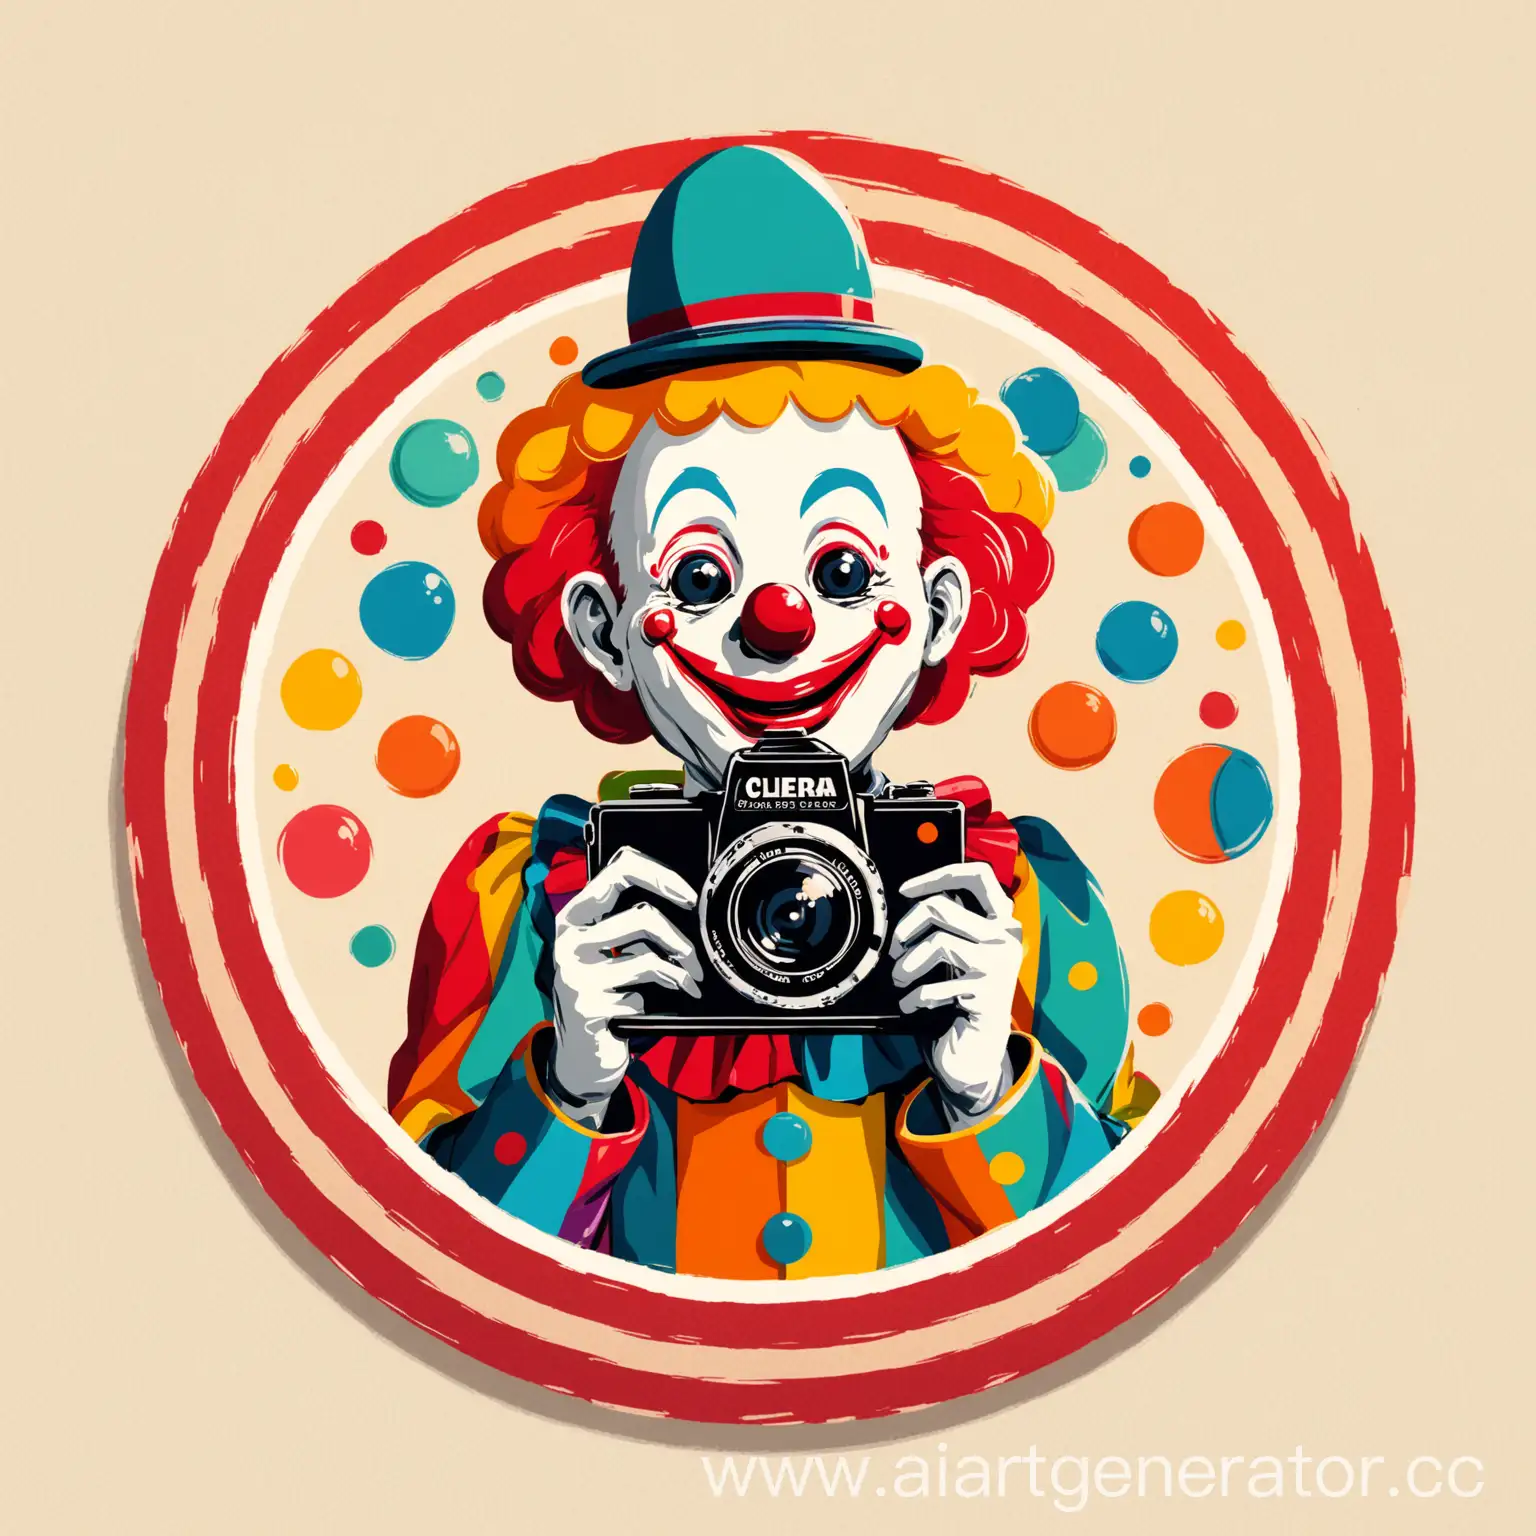 Circular-Clown-Logo-with-Camera-Illustration